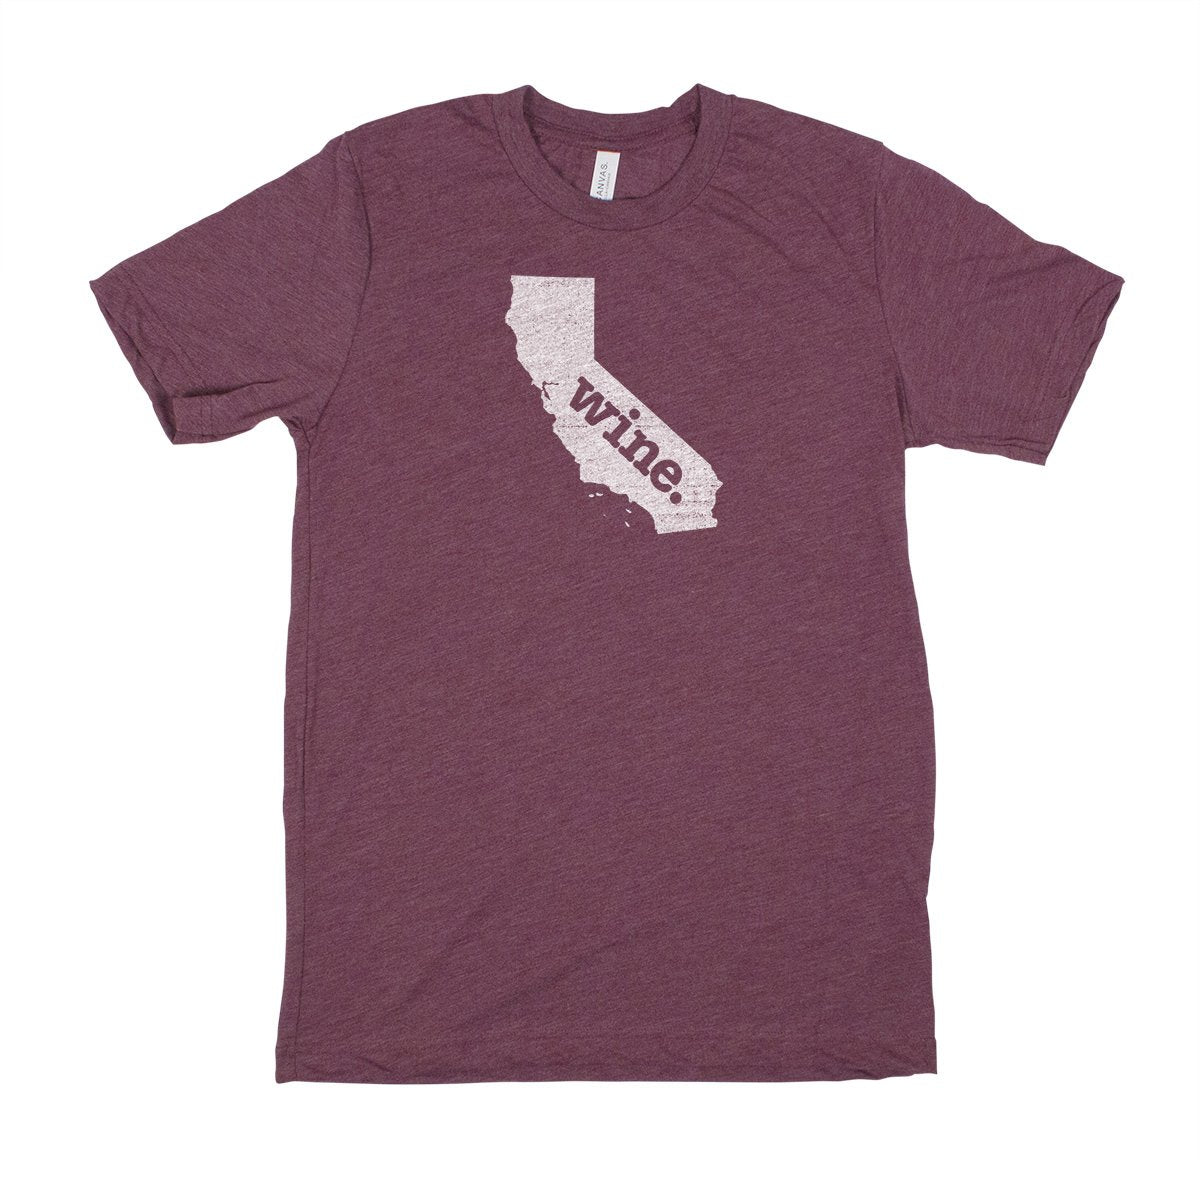 fish. Men's Unisex T-Shirt - Arkansas